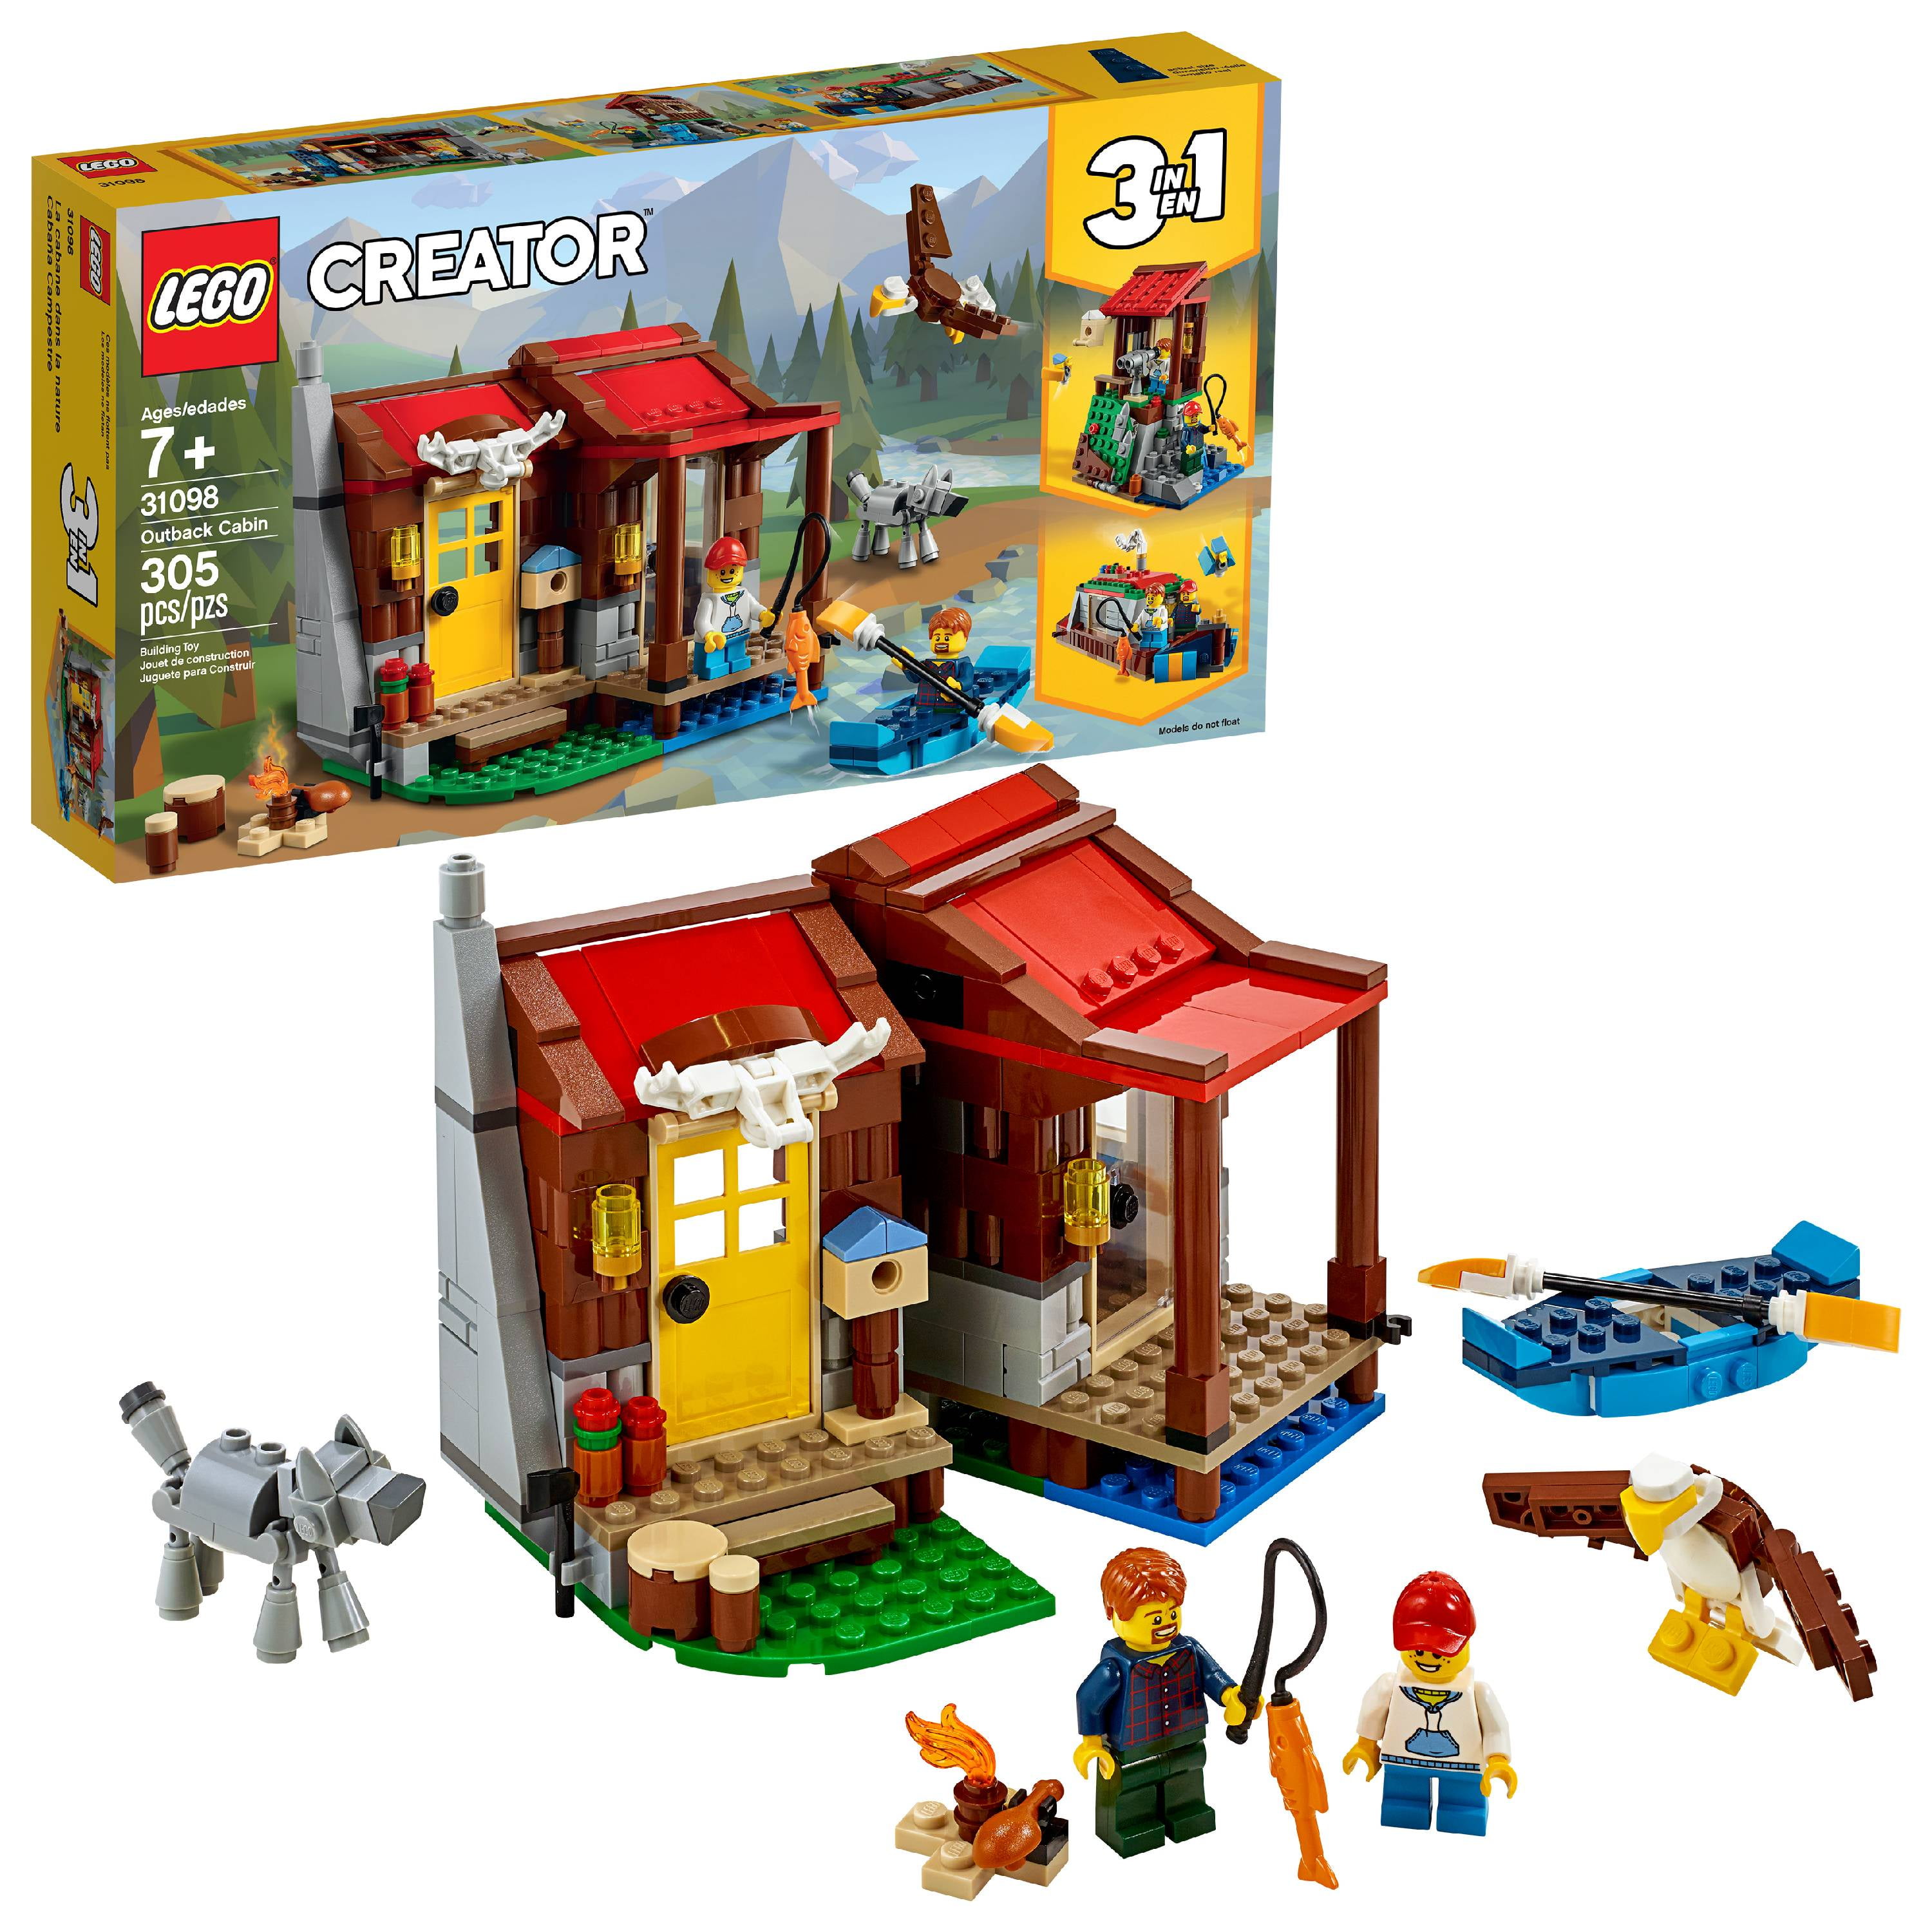 Mig selv Email Forfølge LEGO Creator Outback Cabin 31098 Toy Building Kit (305 Pieces) - Walmart.com